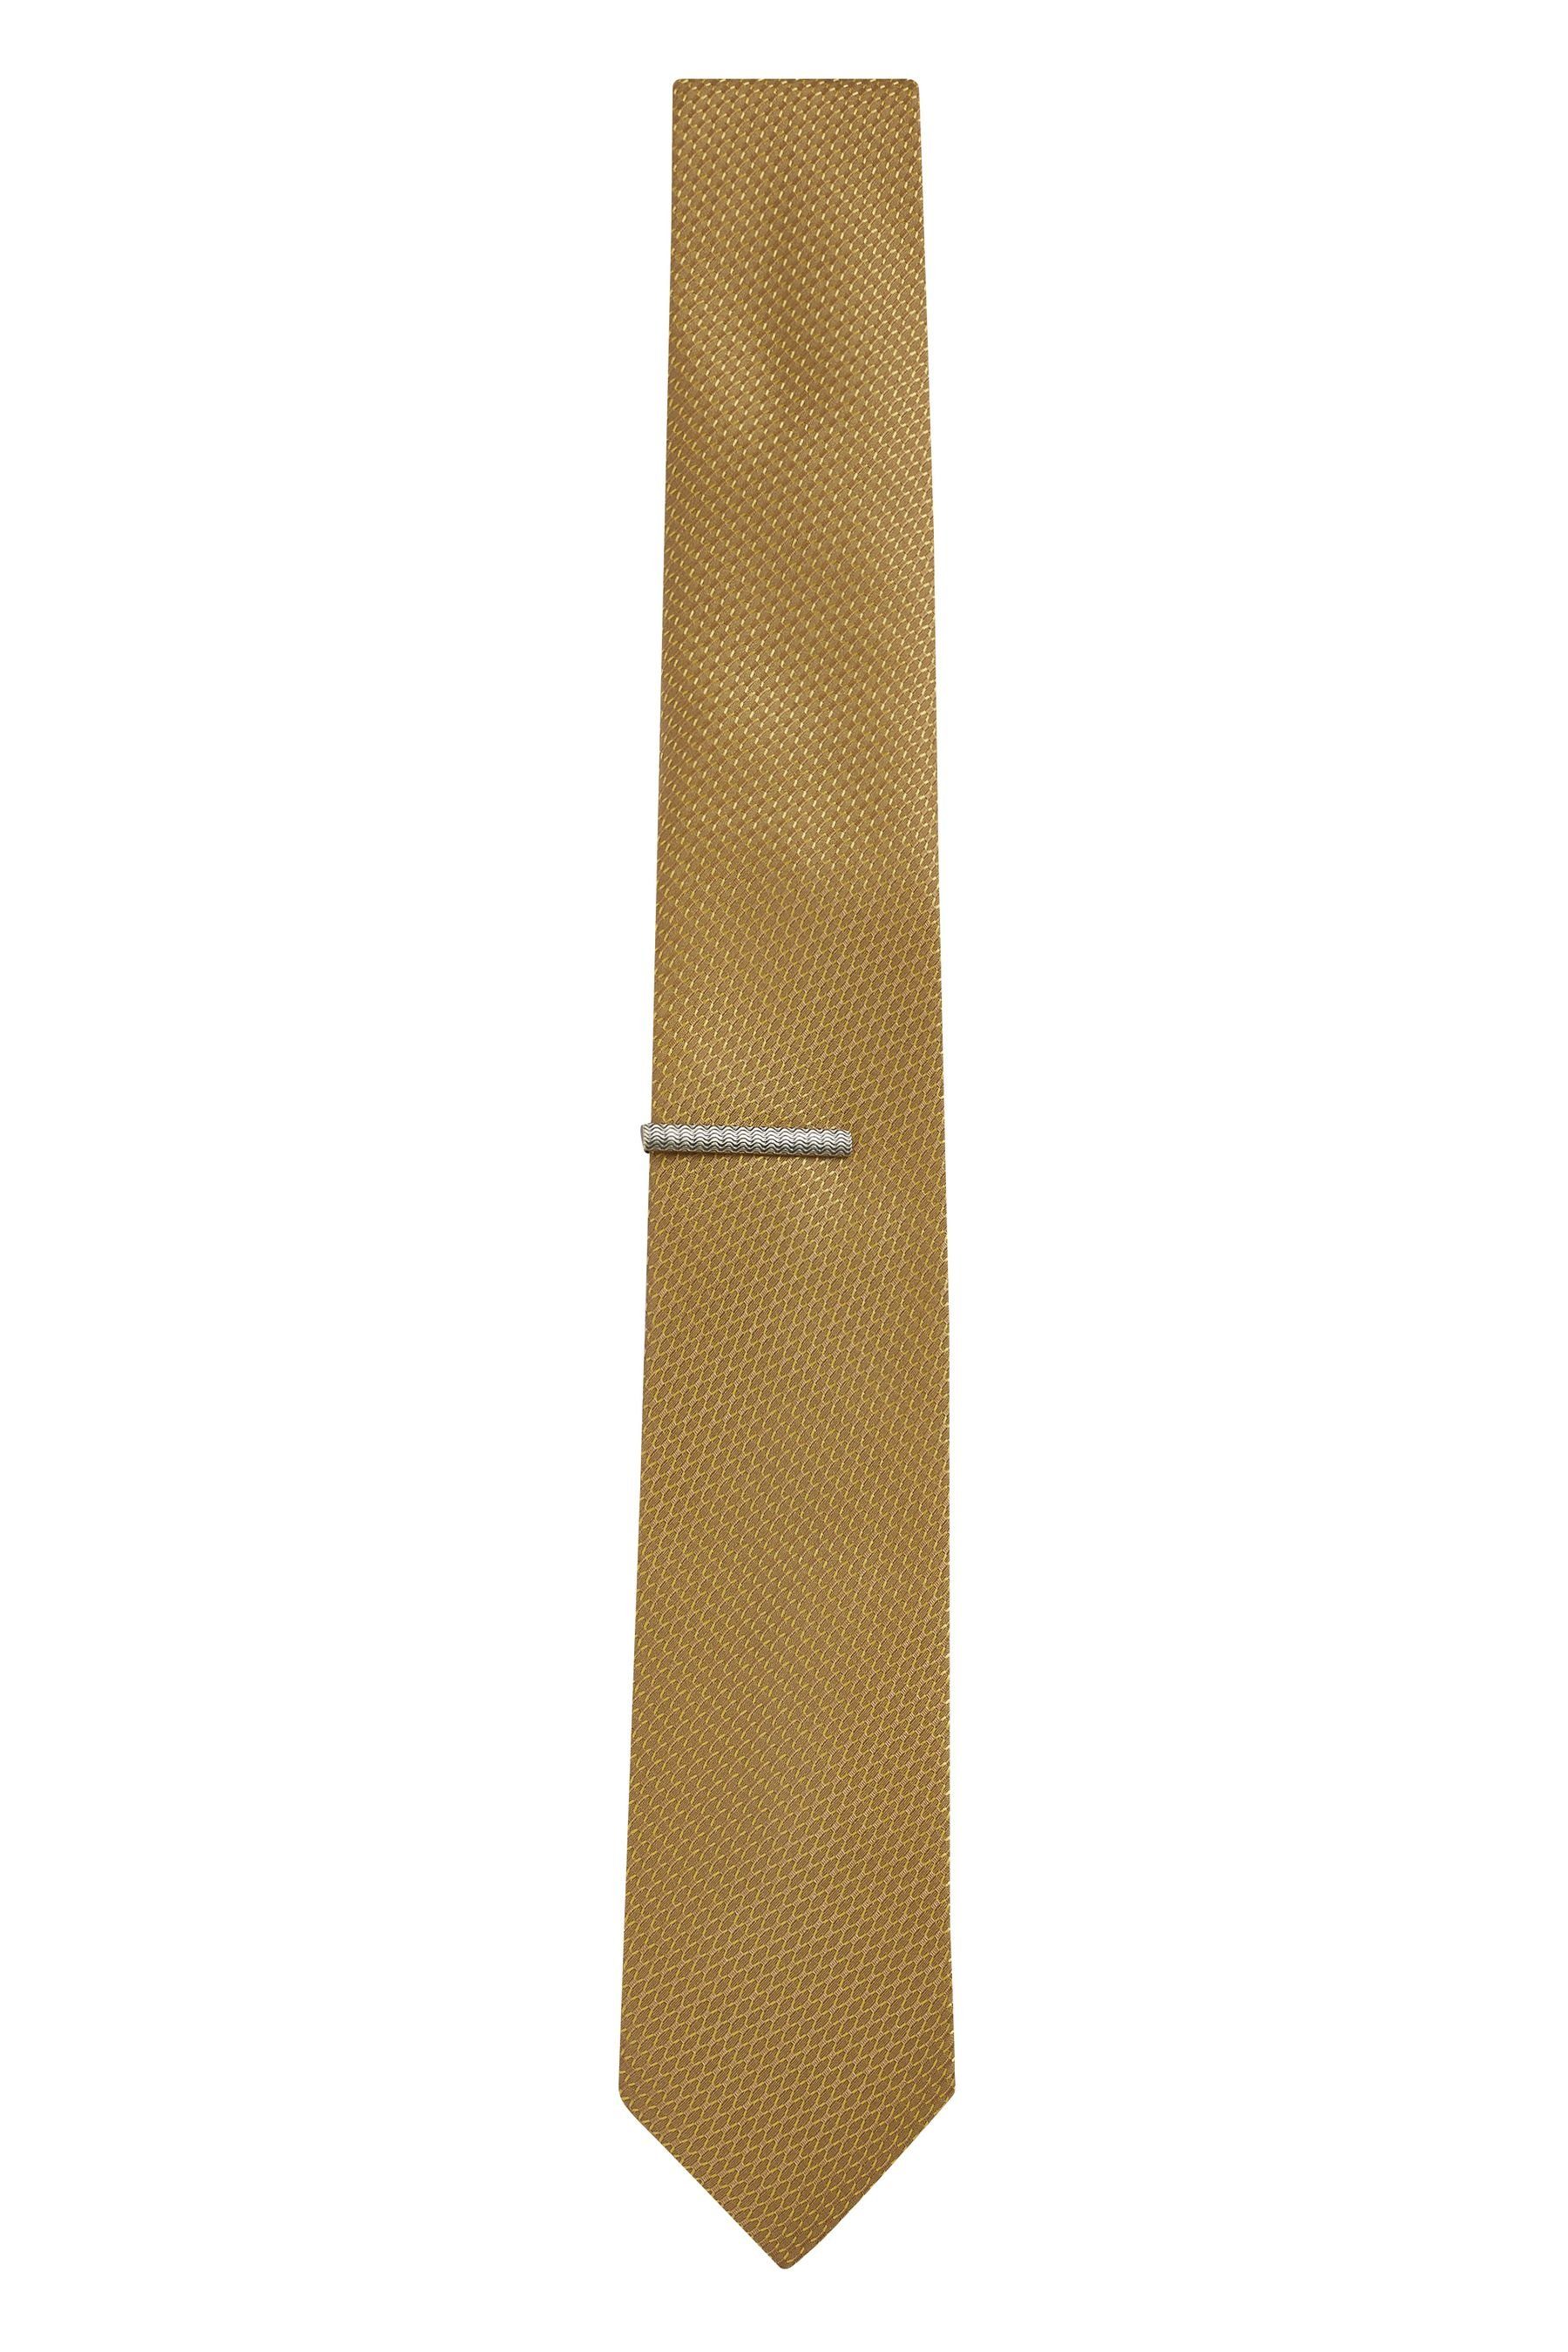 Yellow Mustard Krawatte + Next Krawatte Klammer Recyclingpolyester Schmale (2-St) aus